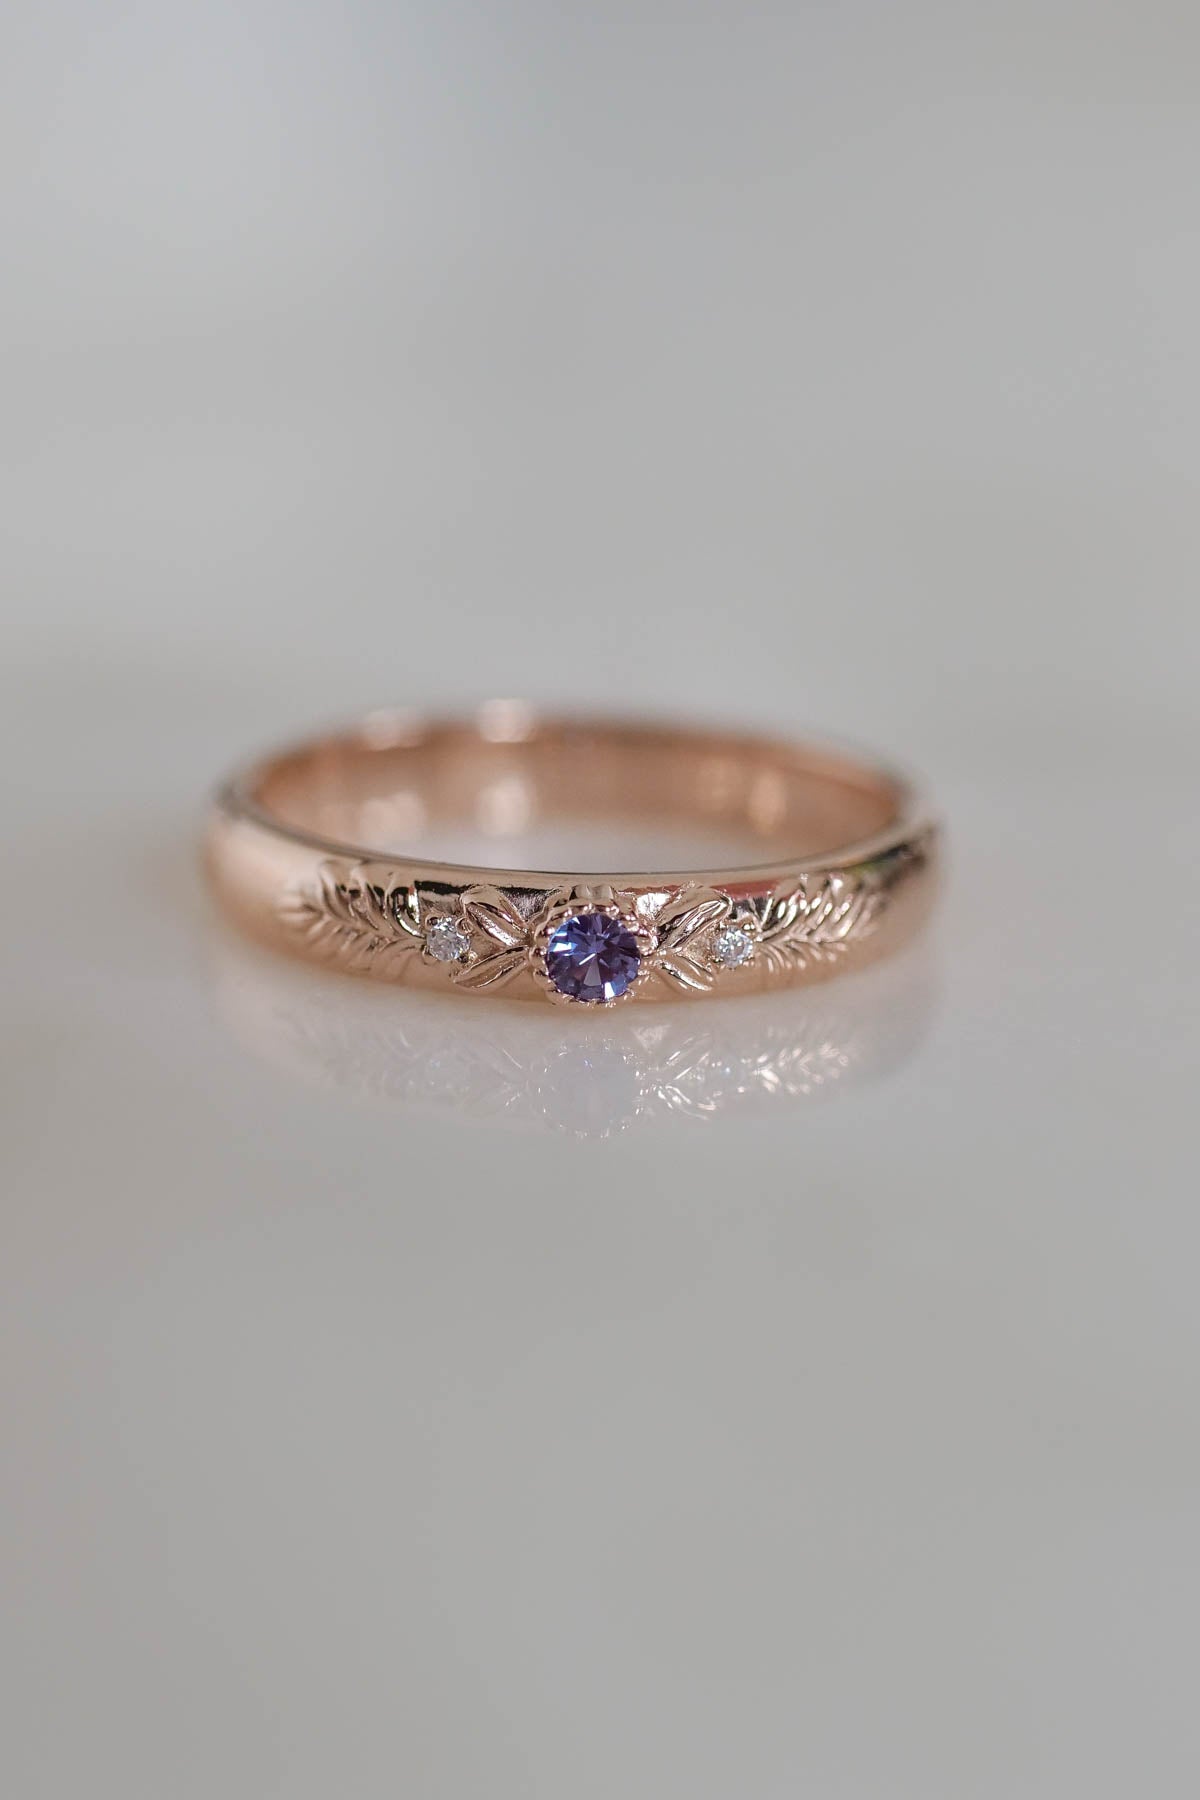 Alternative wedding ring with  alexandrite and diamonds rose gold wedding band 